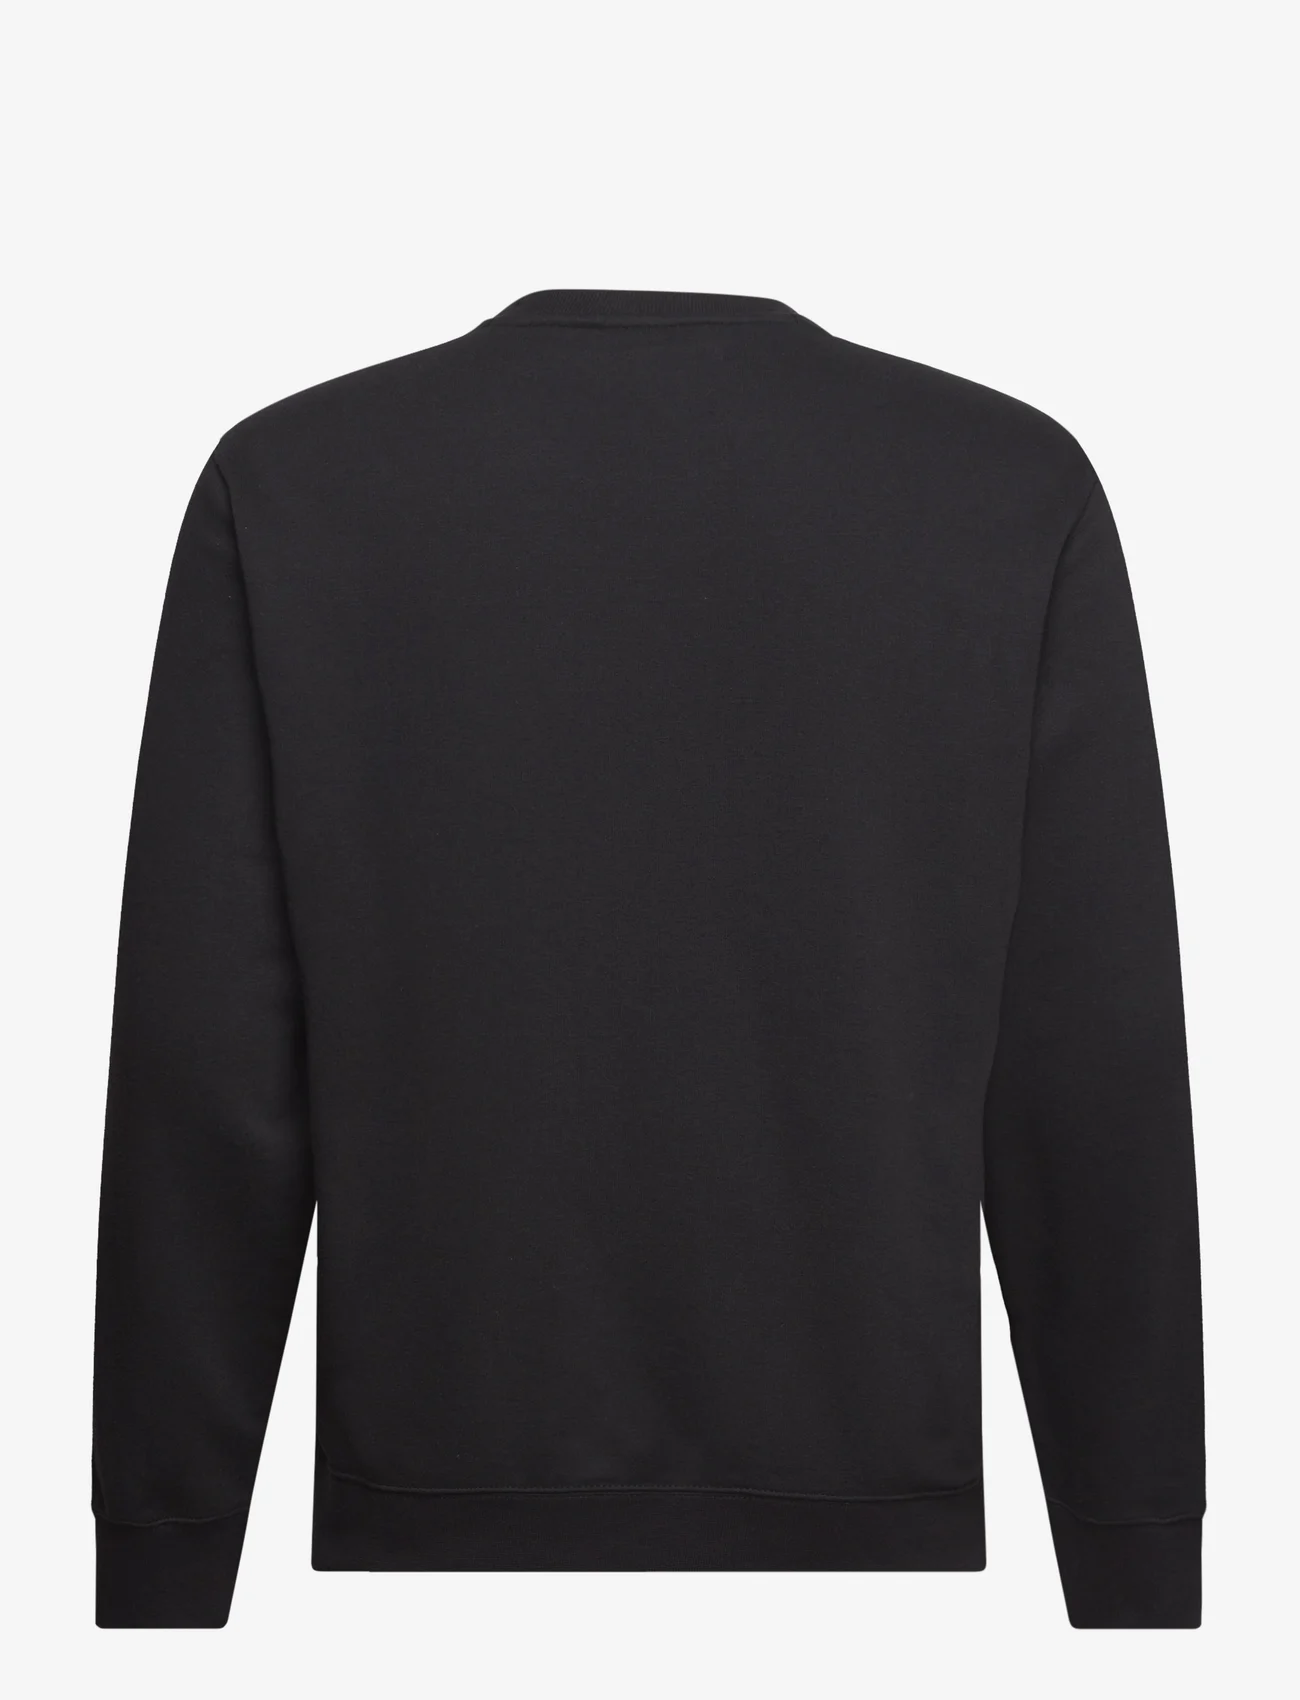 Champion - Crewneck Sweatshirt - bluzy z kapturem - black beauty - 1